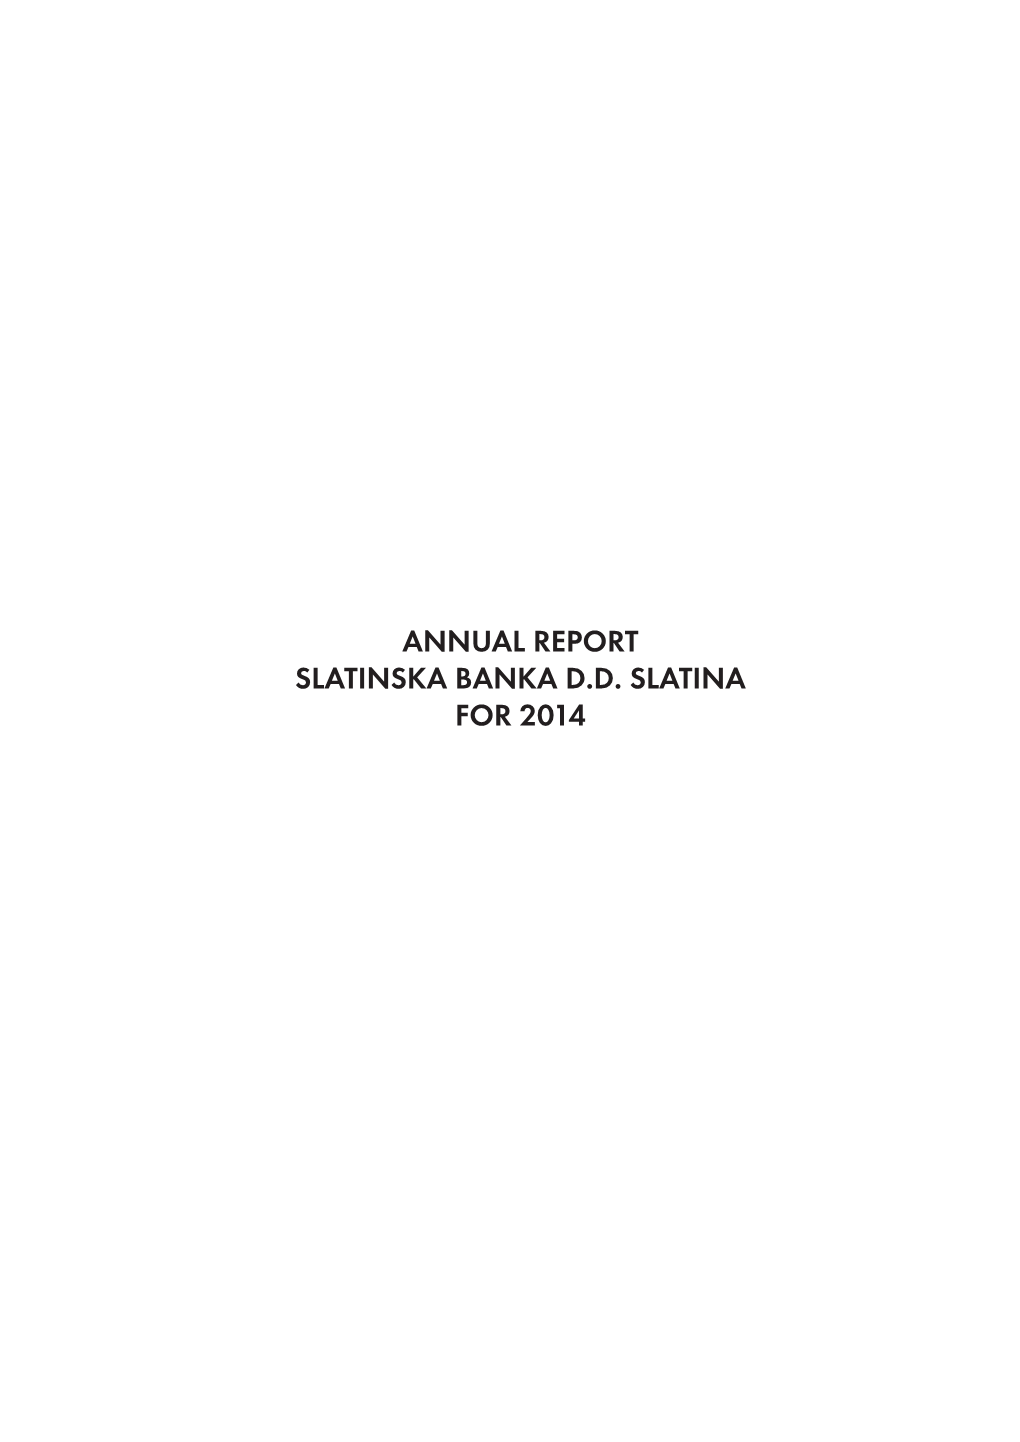 Annual Report Slatinska Banka D.D. Slatina for 2014